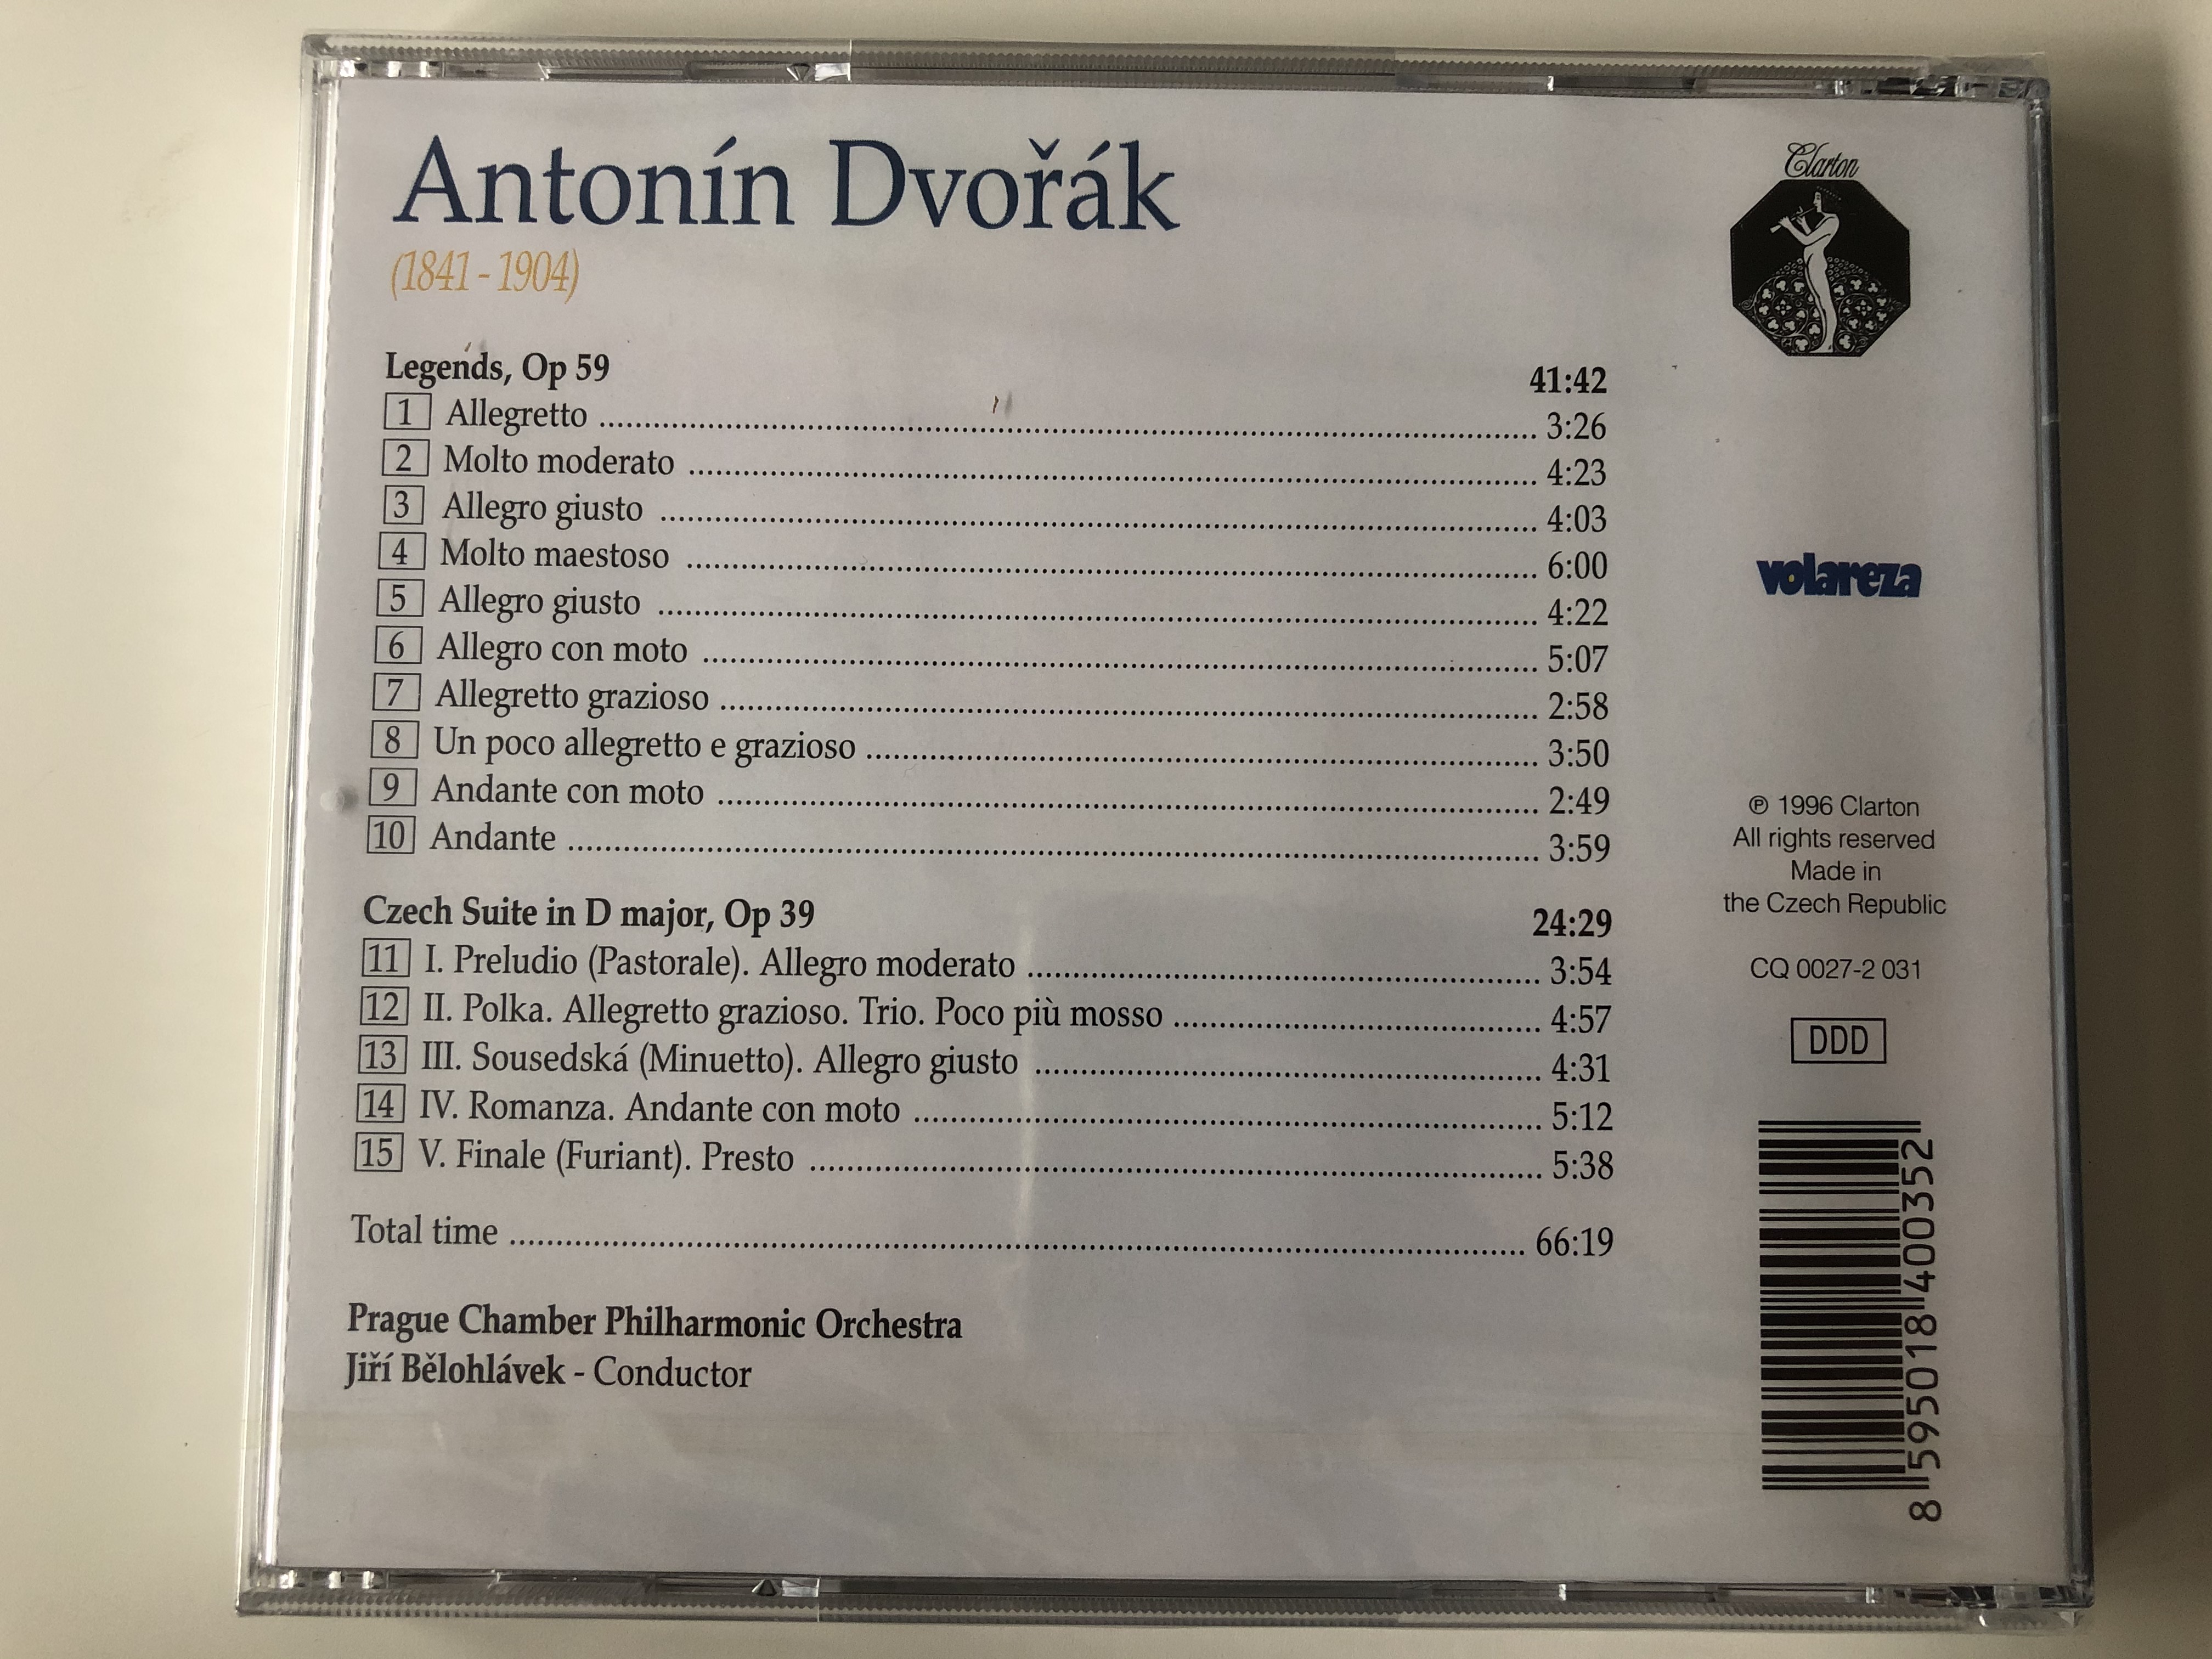 anton-n-dvo-k-legends-czech-suite-prague-chamber-philharmonic-orchestra-jiri-belohlavek-clarton-audio-cd-1996-cq-0027-2-031-2-.jpg